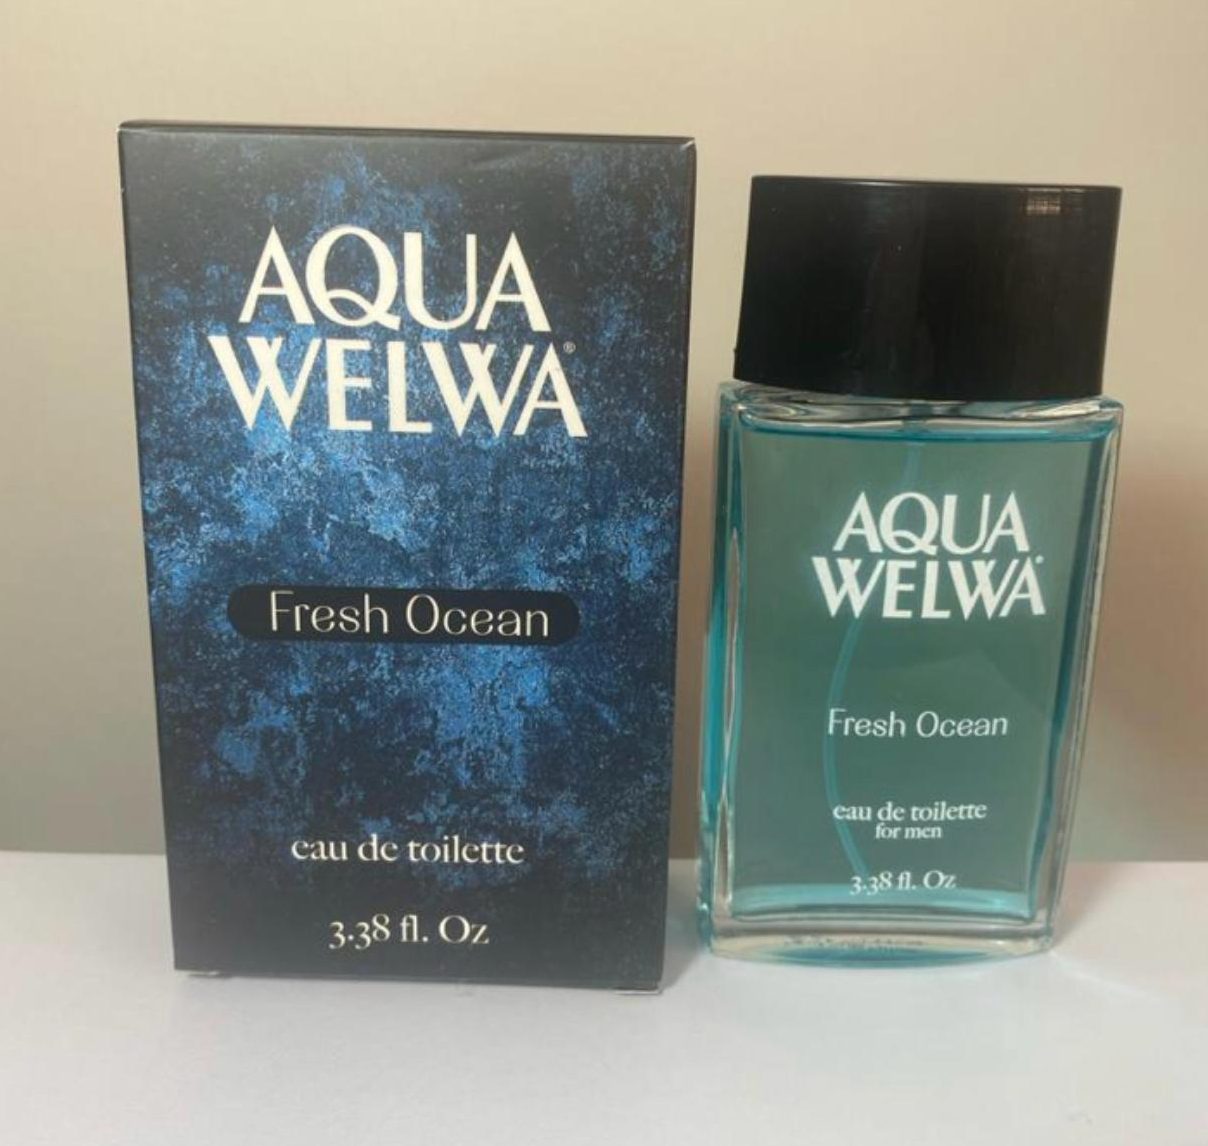 Aqua Welwa Fresh Ocean